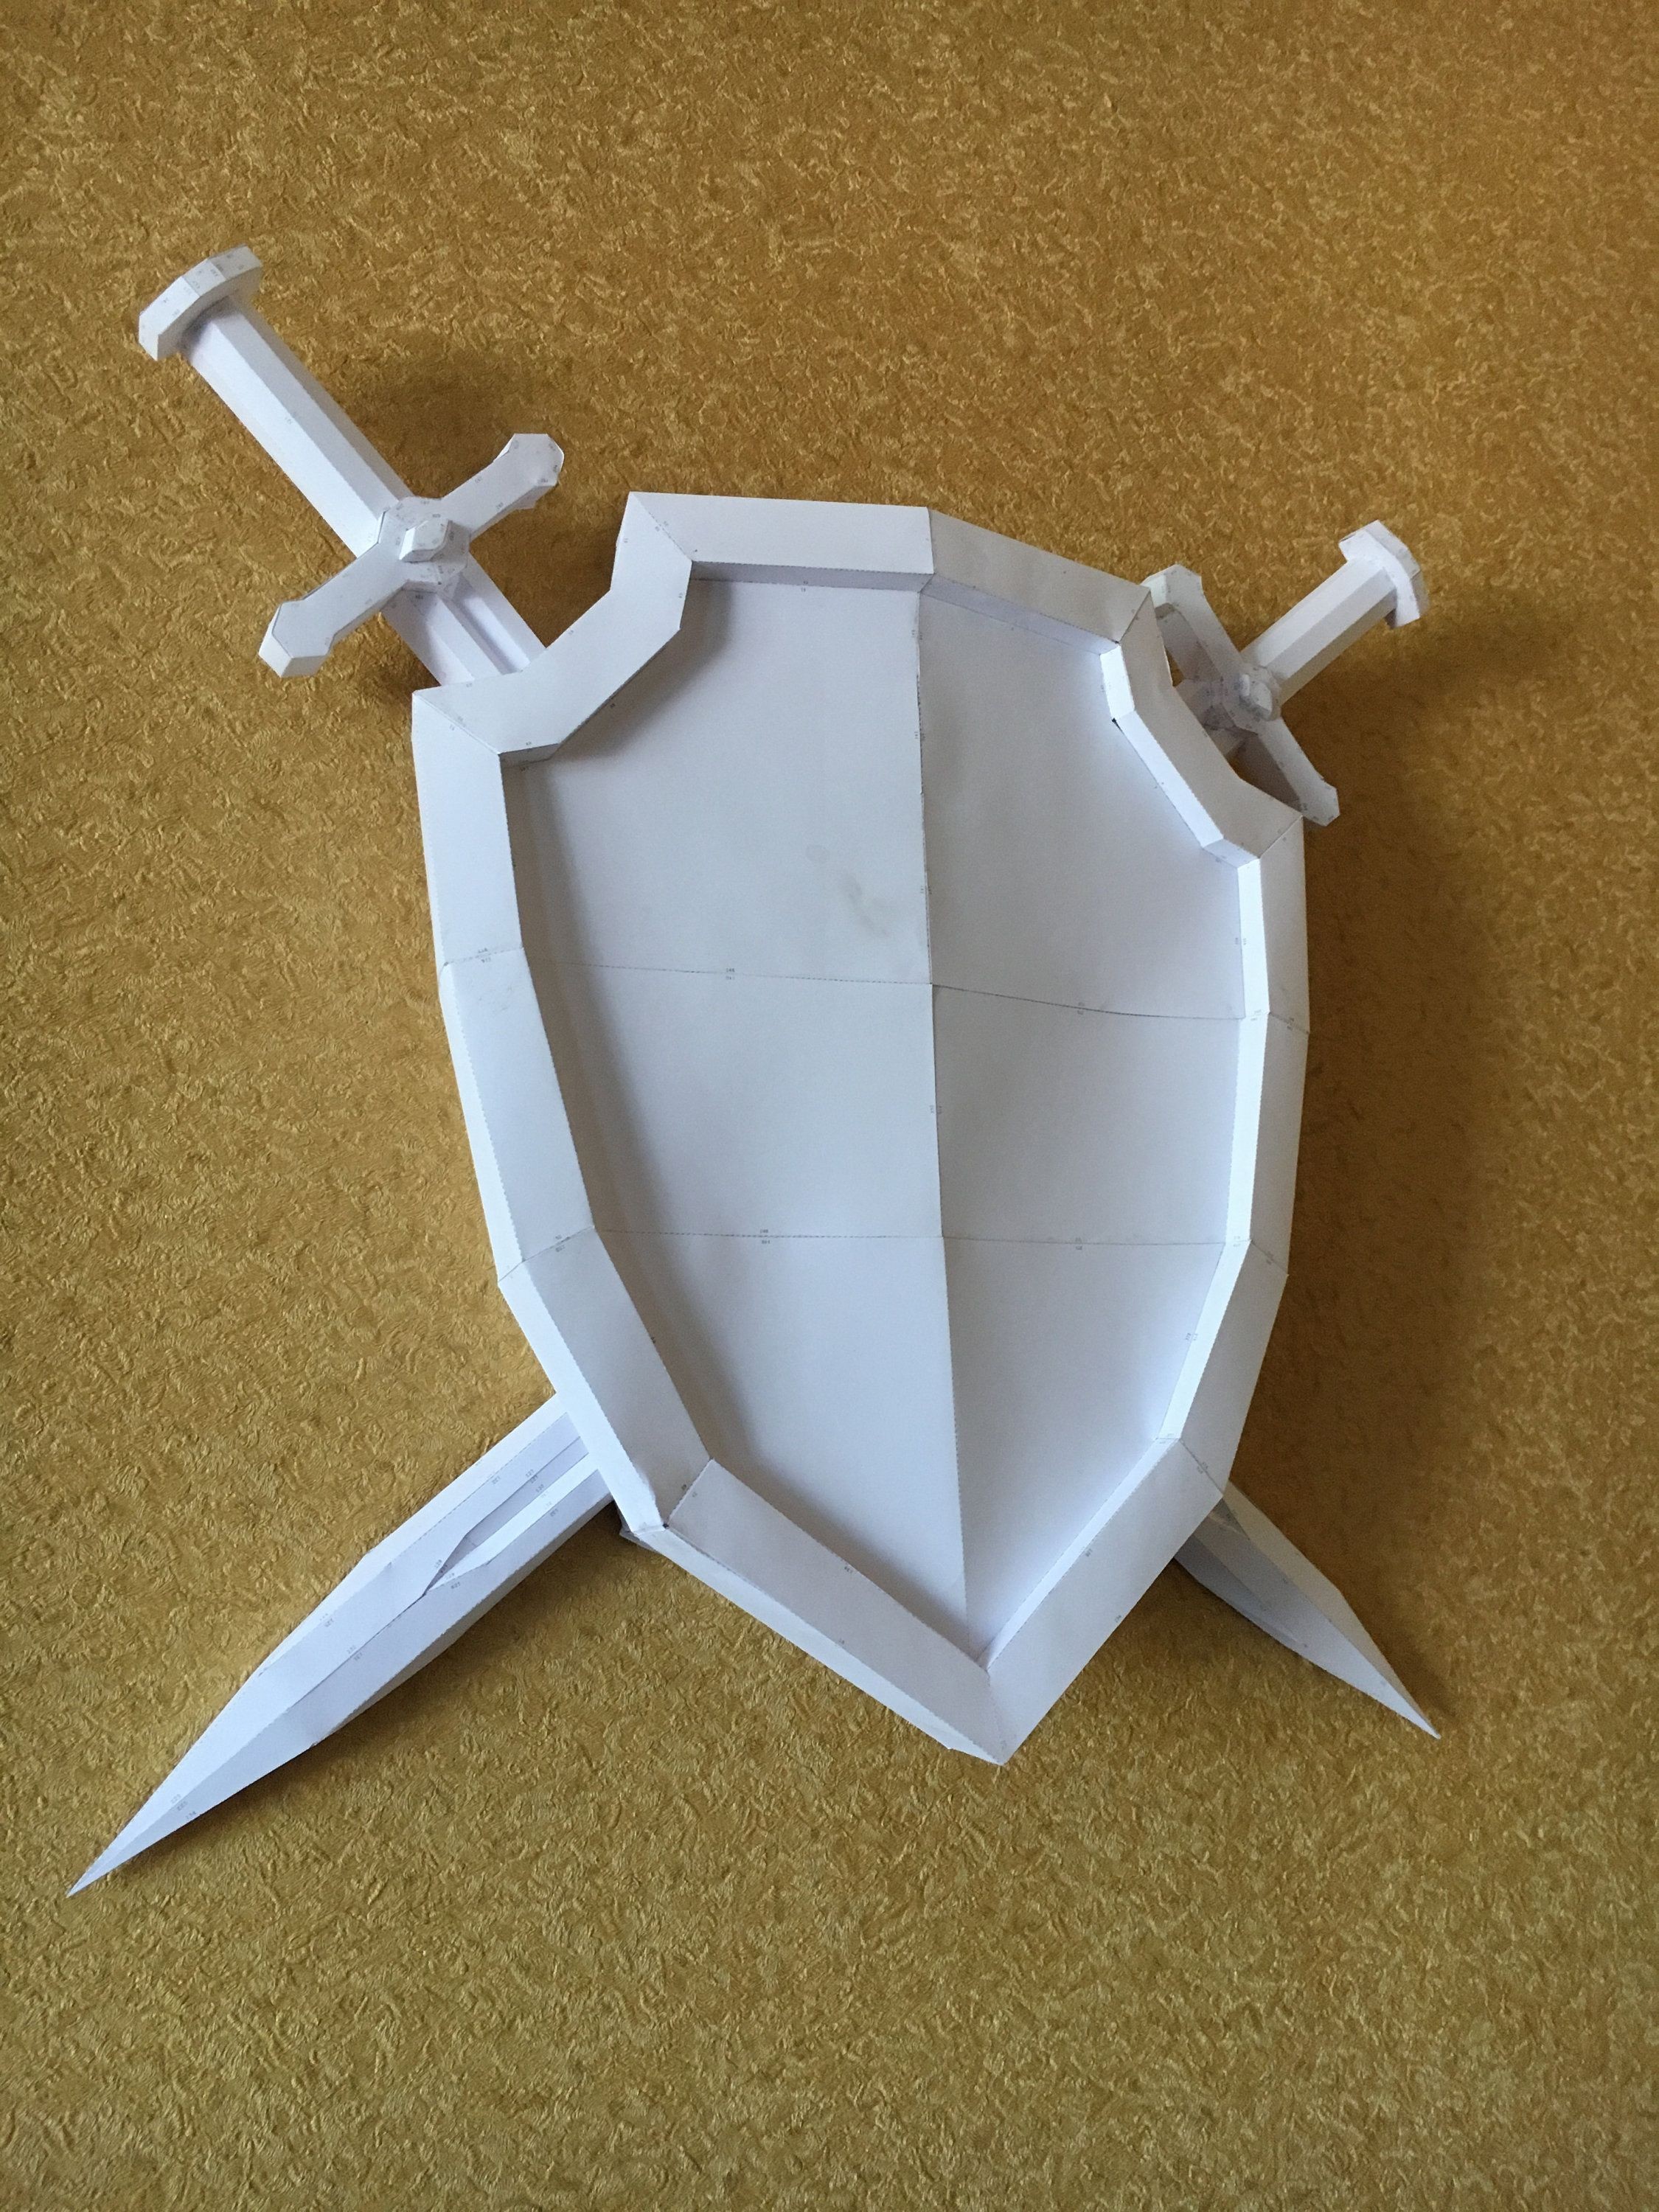 Big Head Papercraft Sword Shield Diy Papercraft Model ÐÑÐ¼Ð°Ð¶Ð½ÑÐµ Ð¸Ð·Ð´ÐµÐ Ð¸Ñ